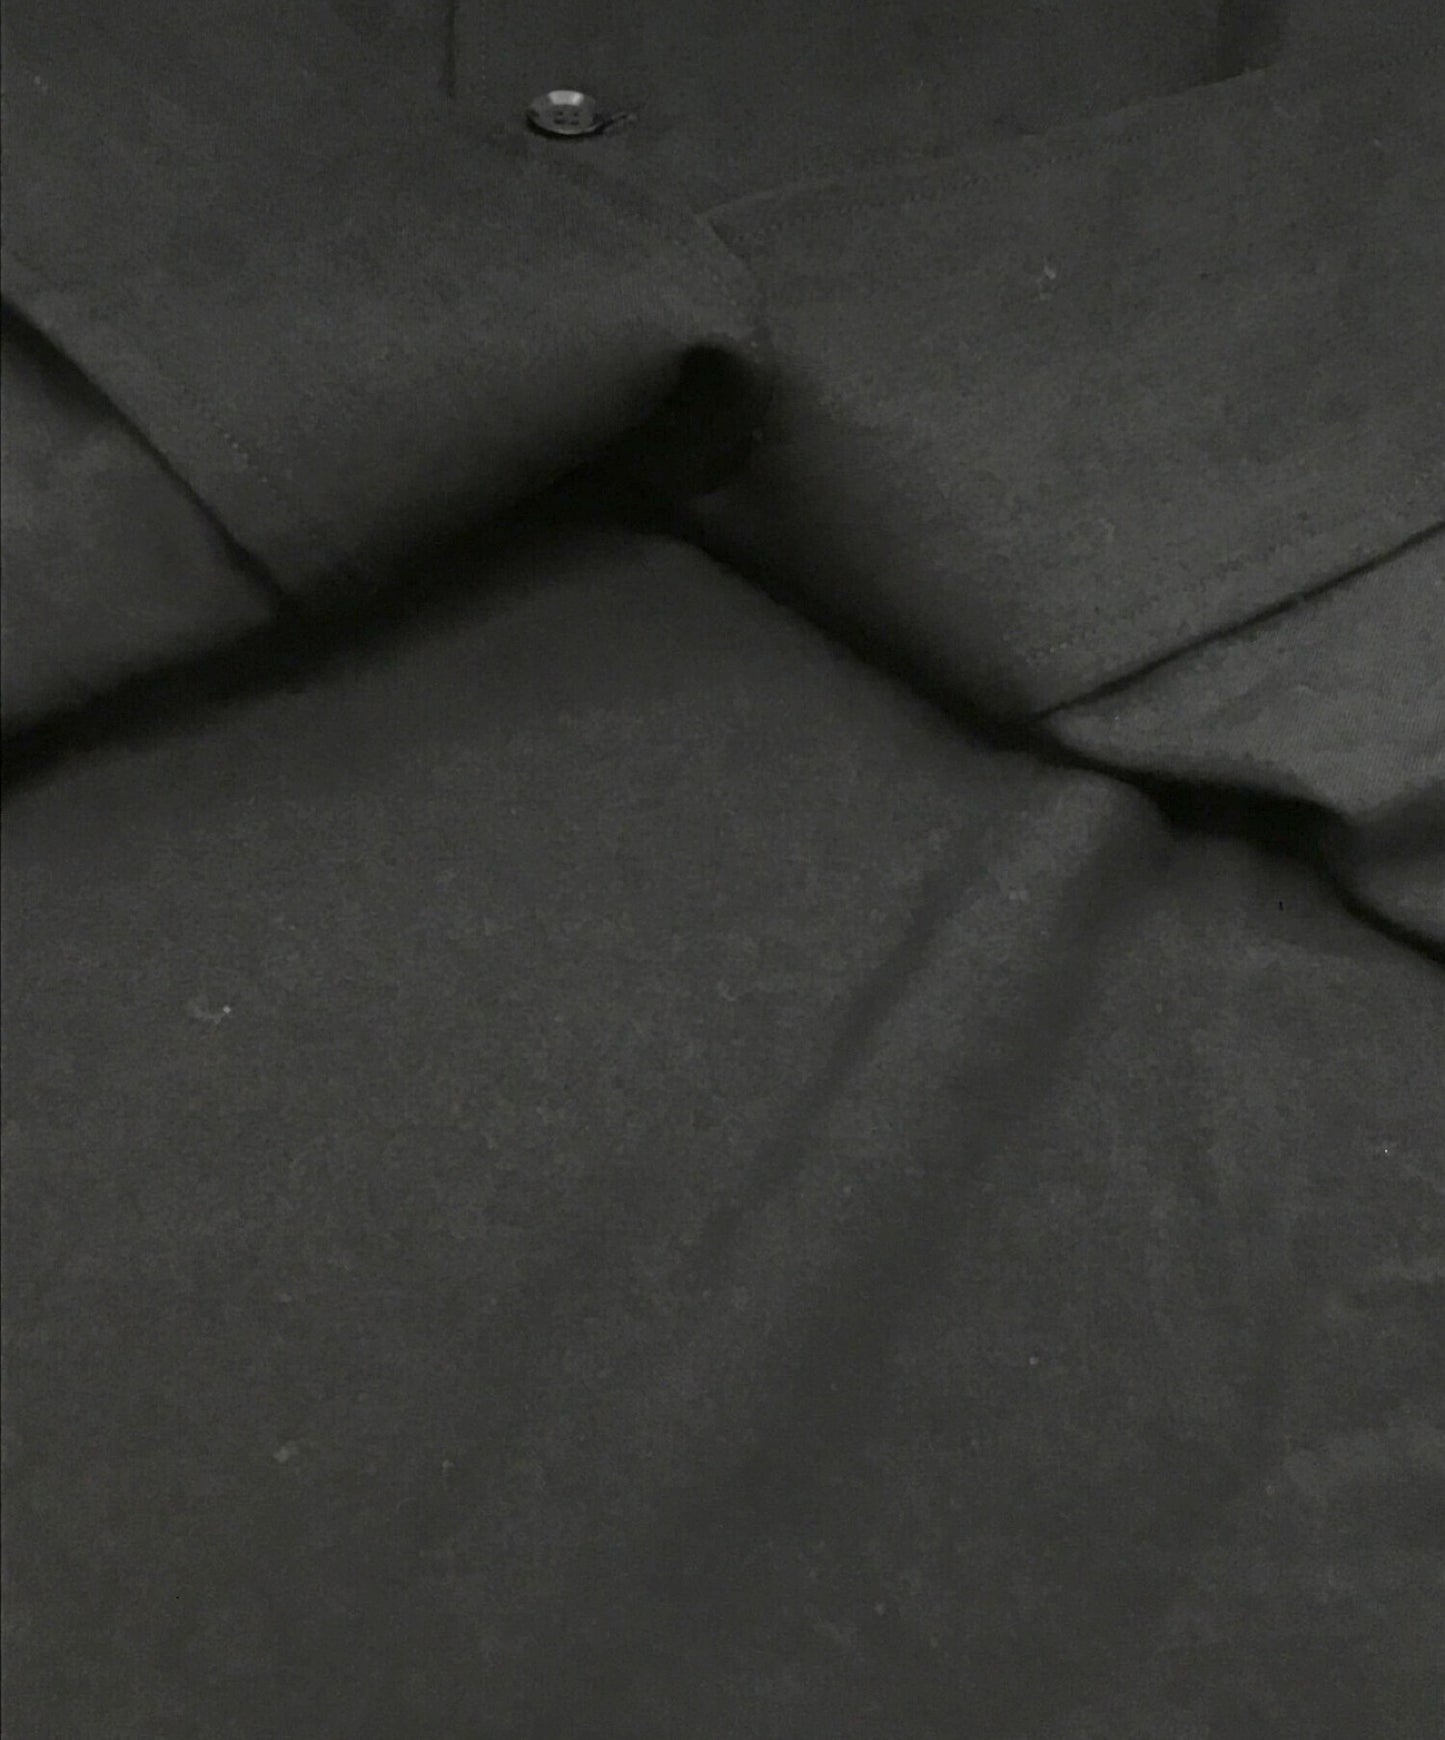 Yohji Yamamoto pour homme wool gabardine shirt HF-B36-169